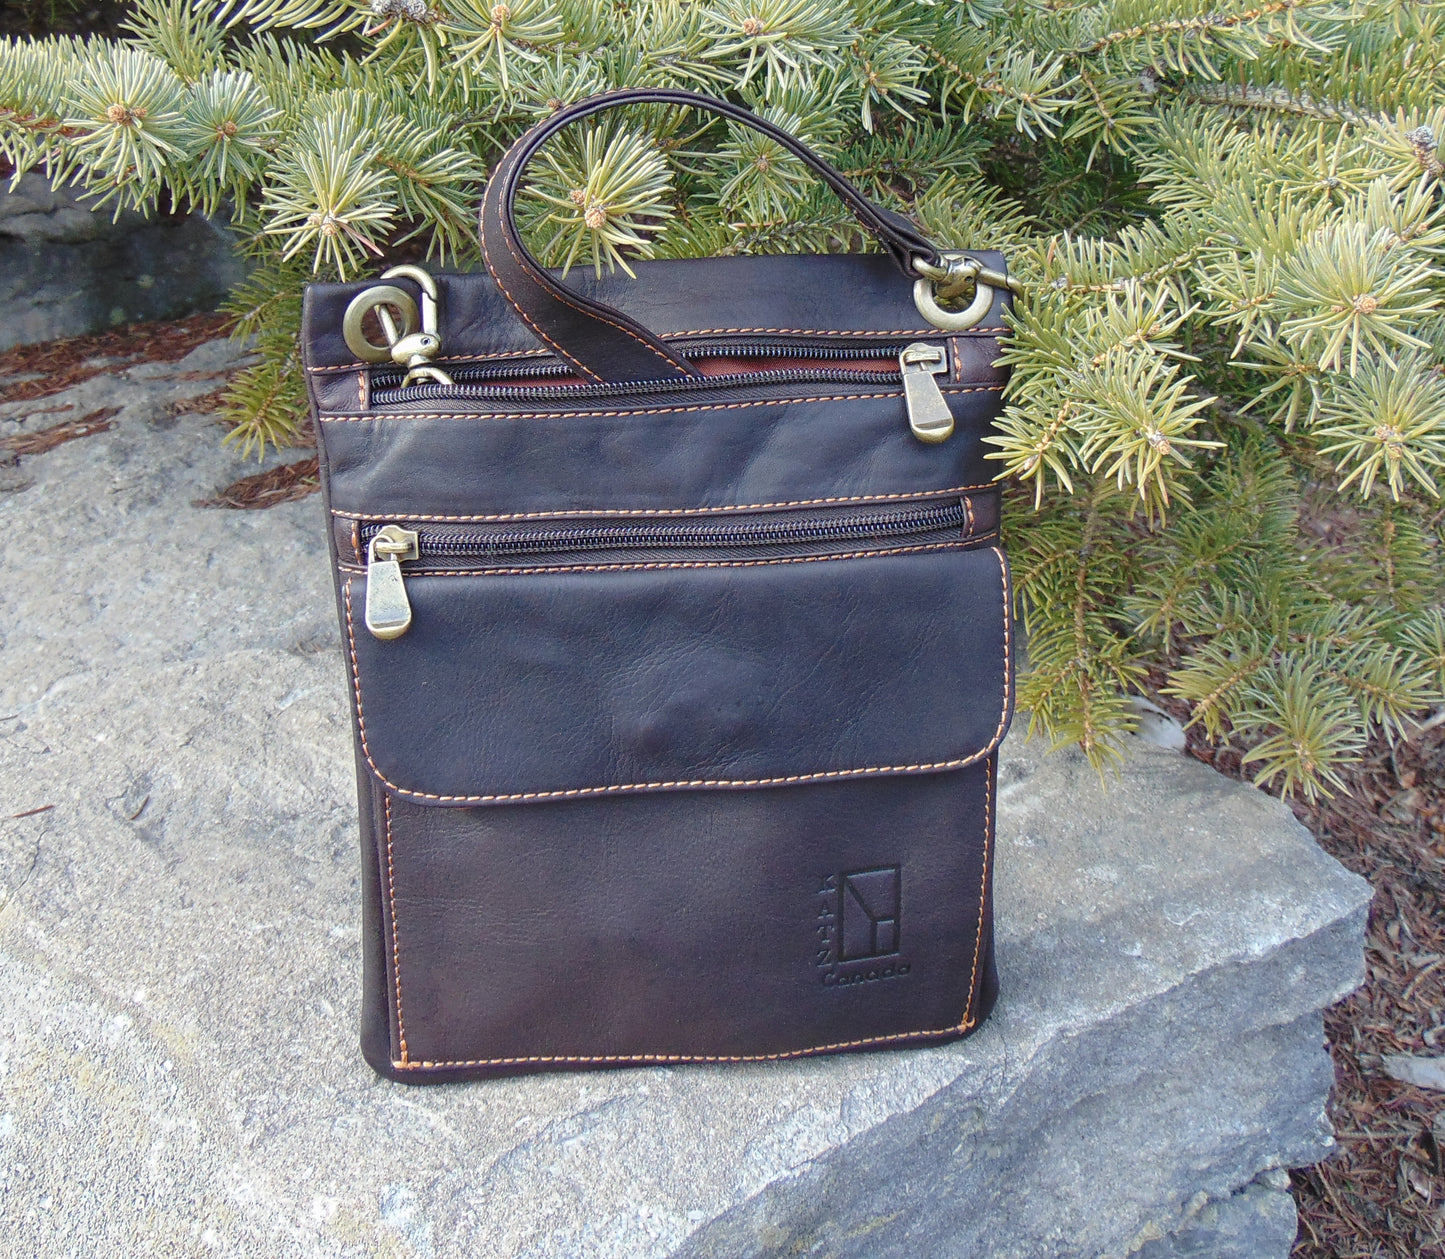 Dark Brown Leather Handbag